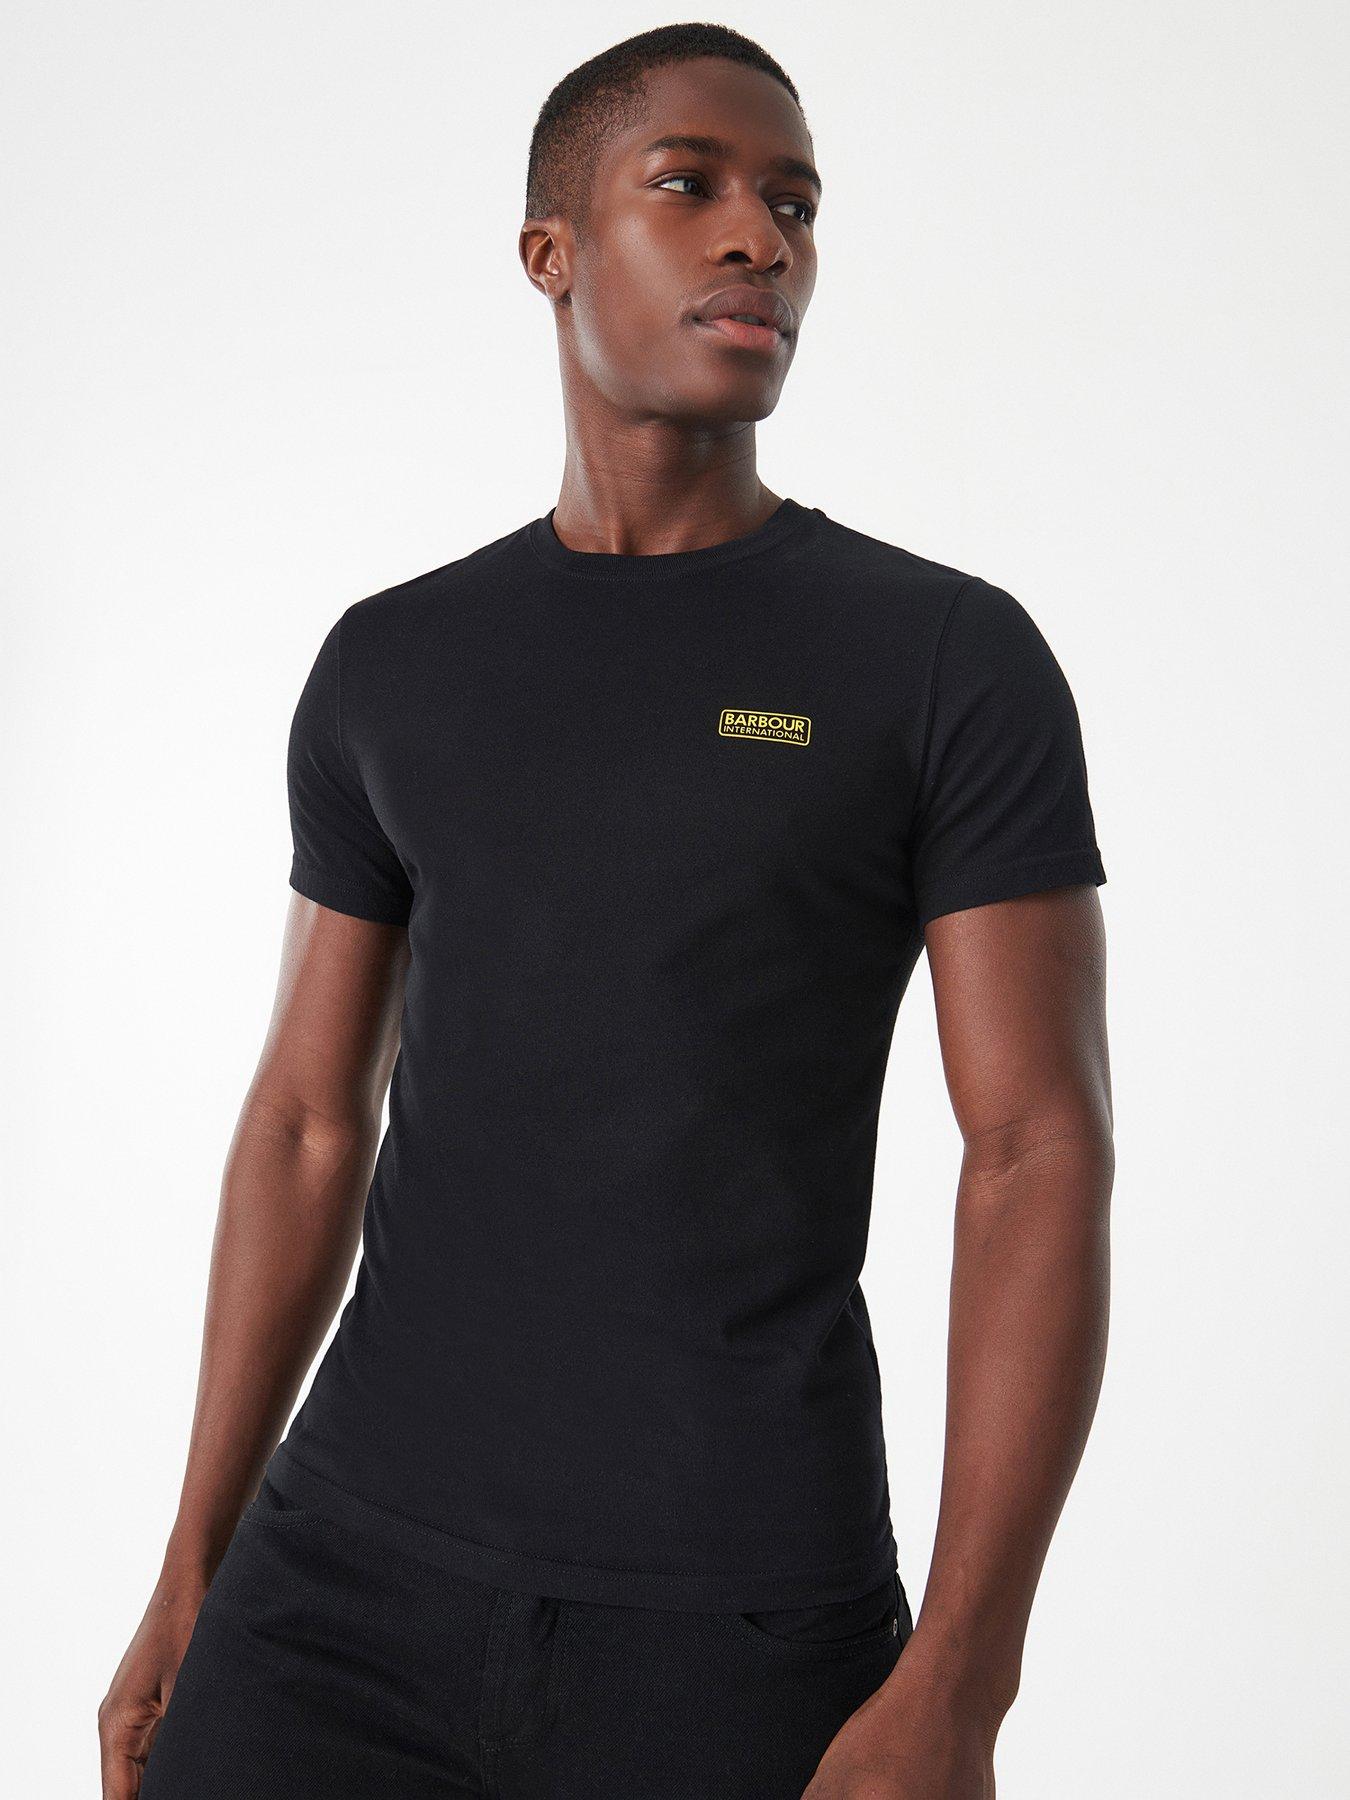 Basic cotton v-neck t-shirt - Man  Mango Man United Kingdom (Channel  Islands)